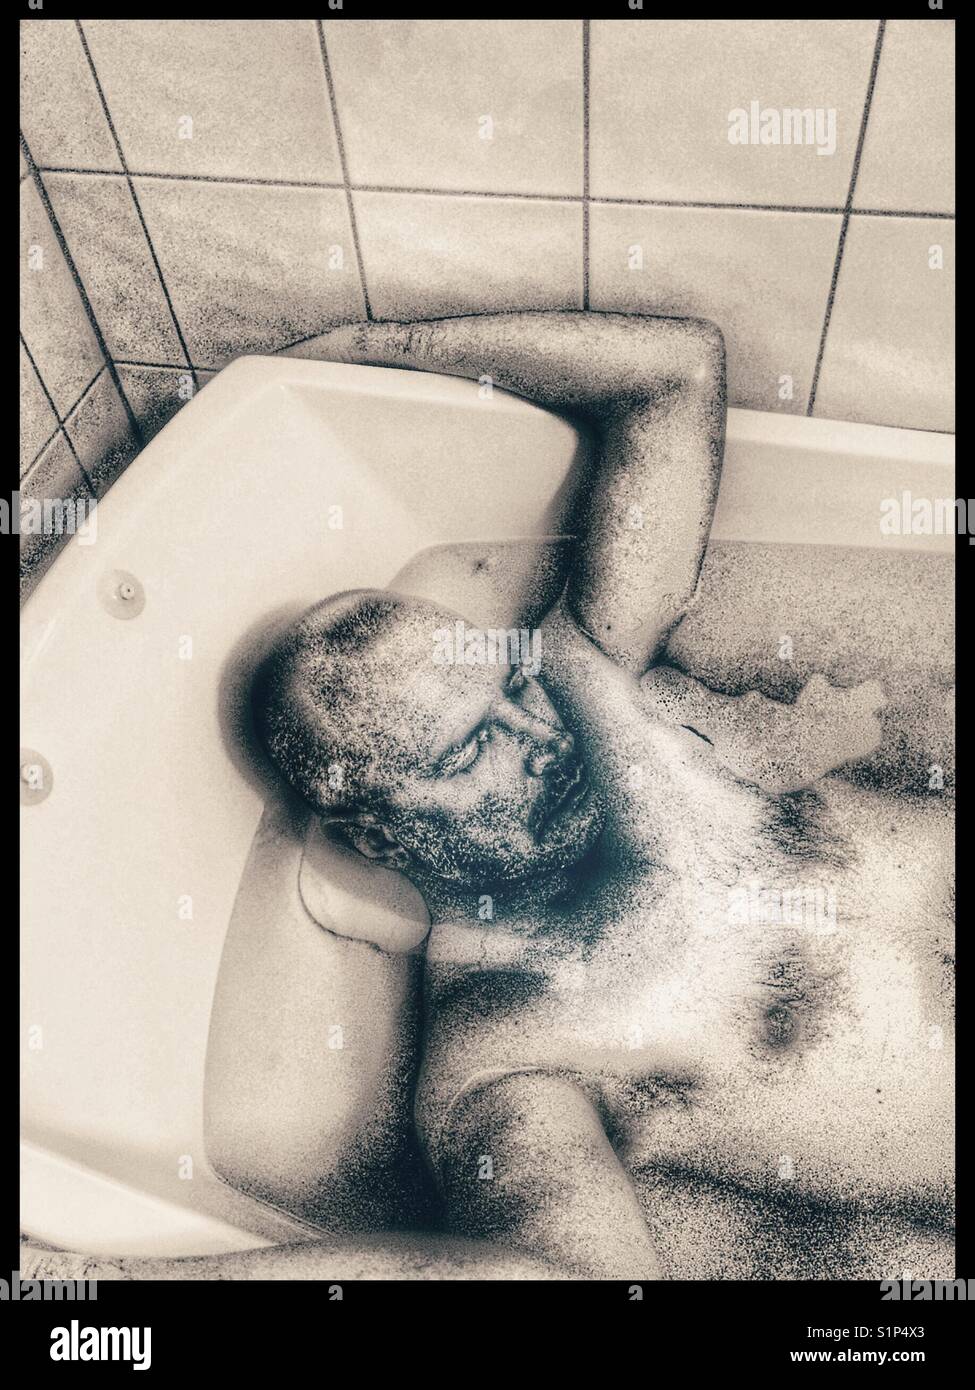 Middle aged Scandinavian man asleep in the bath Stock Photo